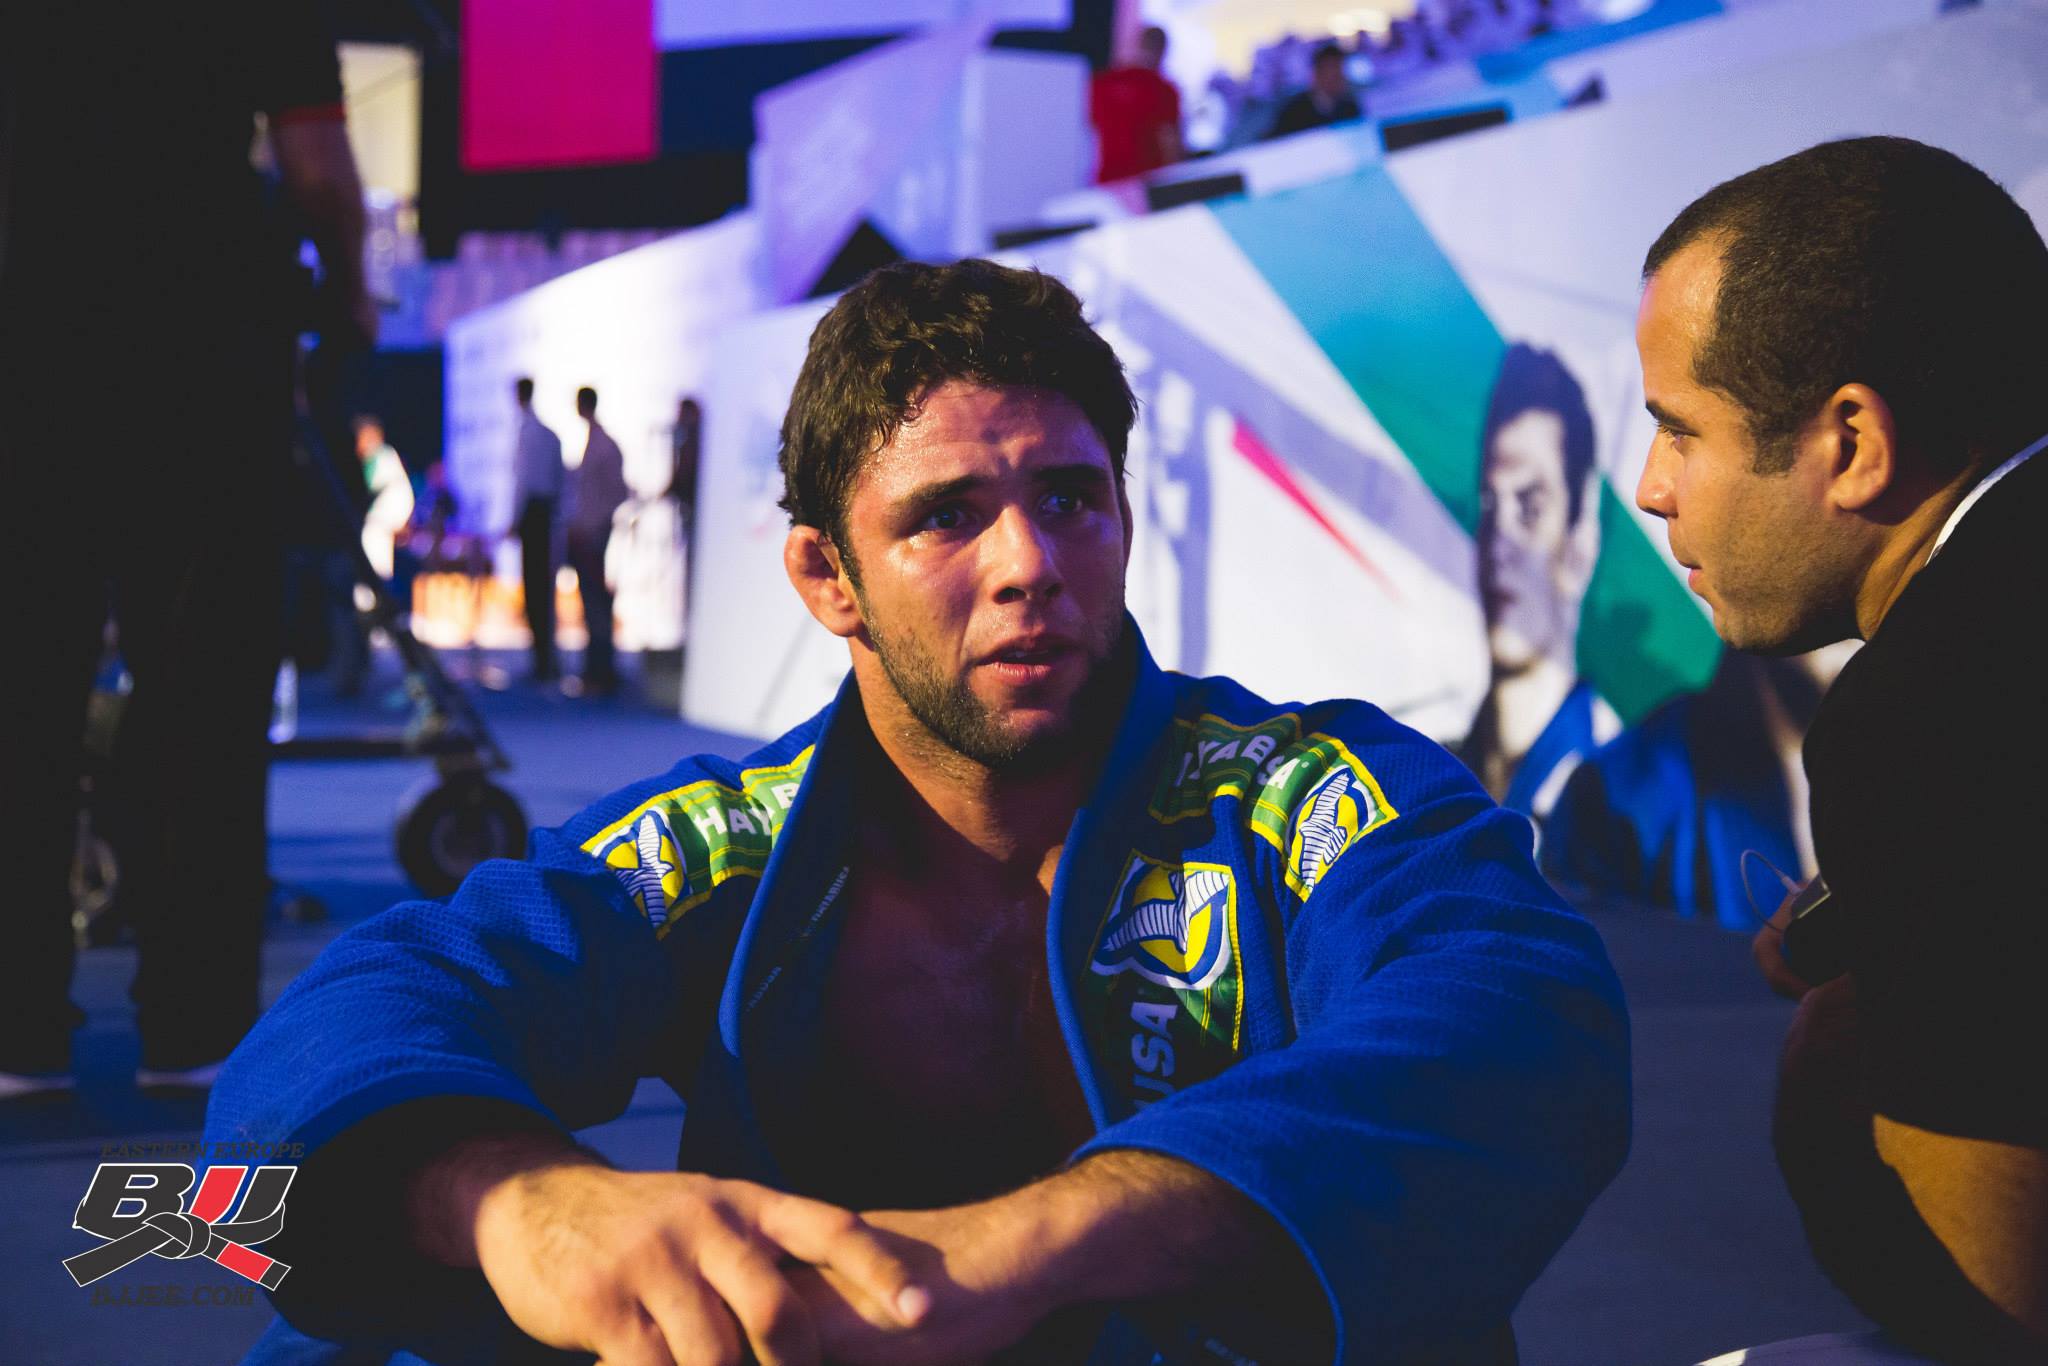 Buchecha On Rodolfo Vieira’s Move to MMA: ‘He’ll Do Very Well’